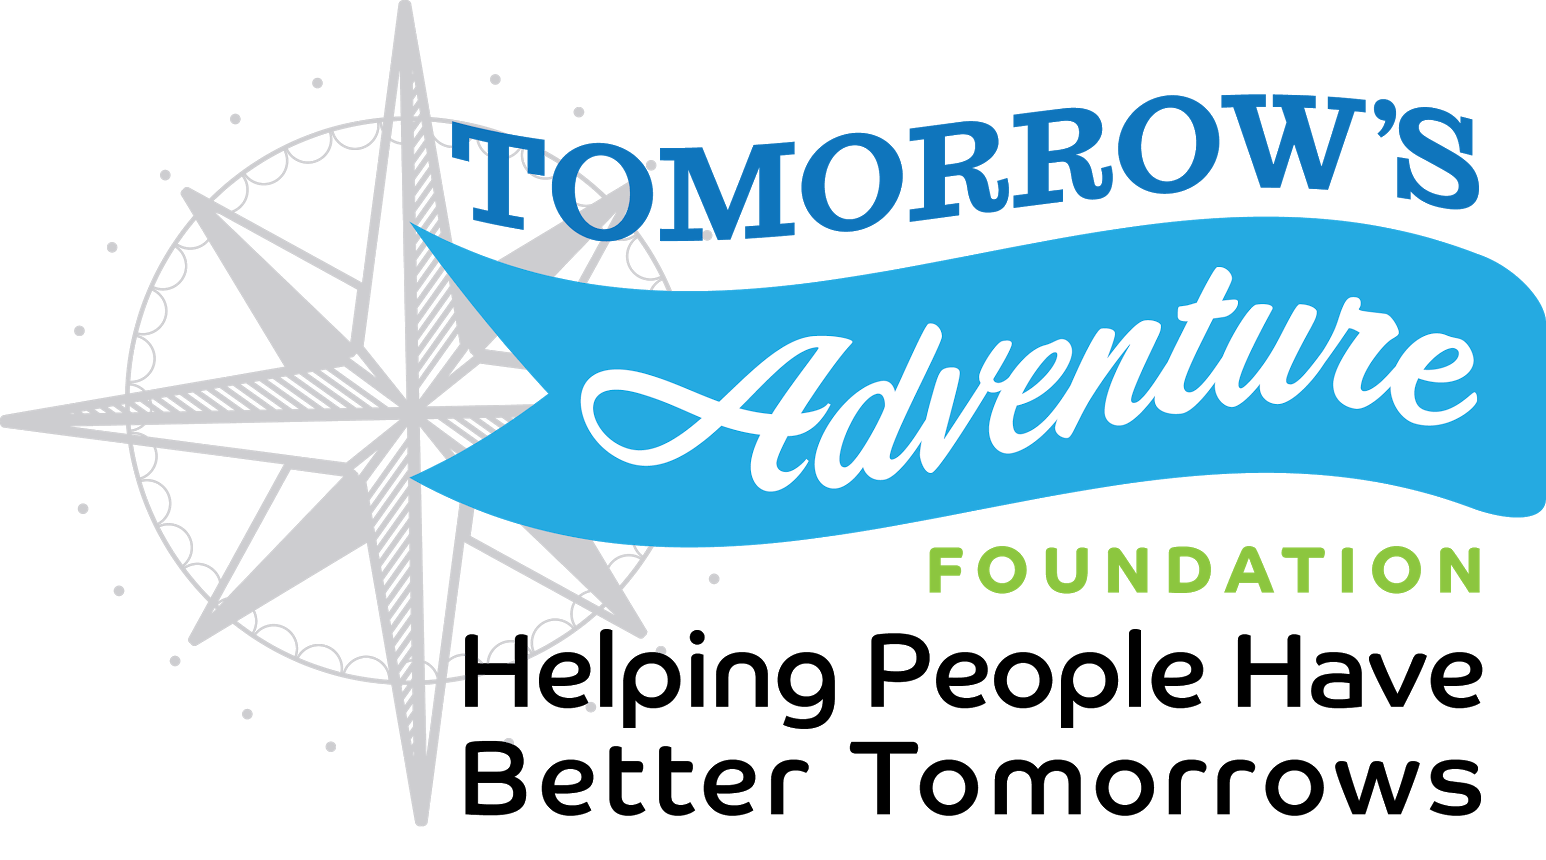 Tomorrow's Adventure Foundation - logo with slogan